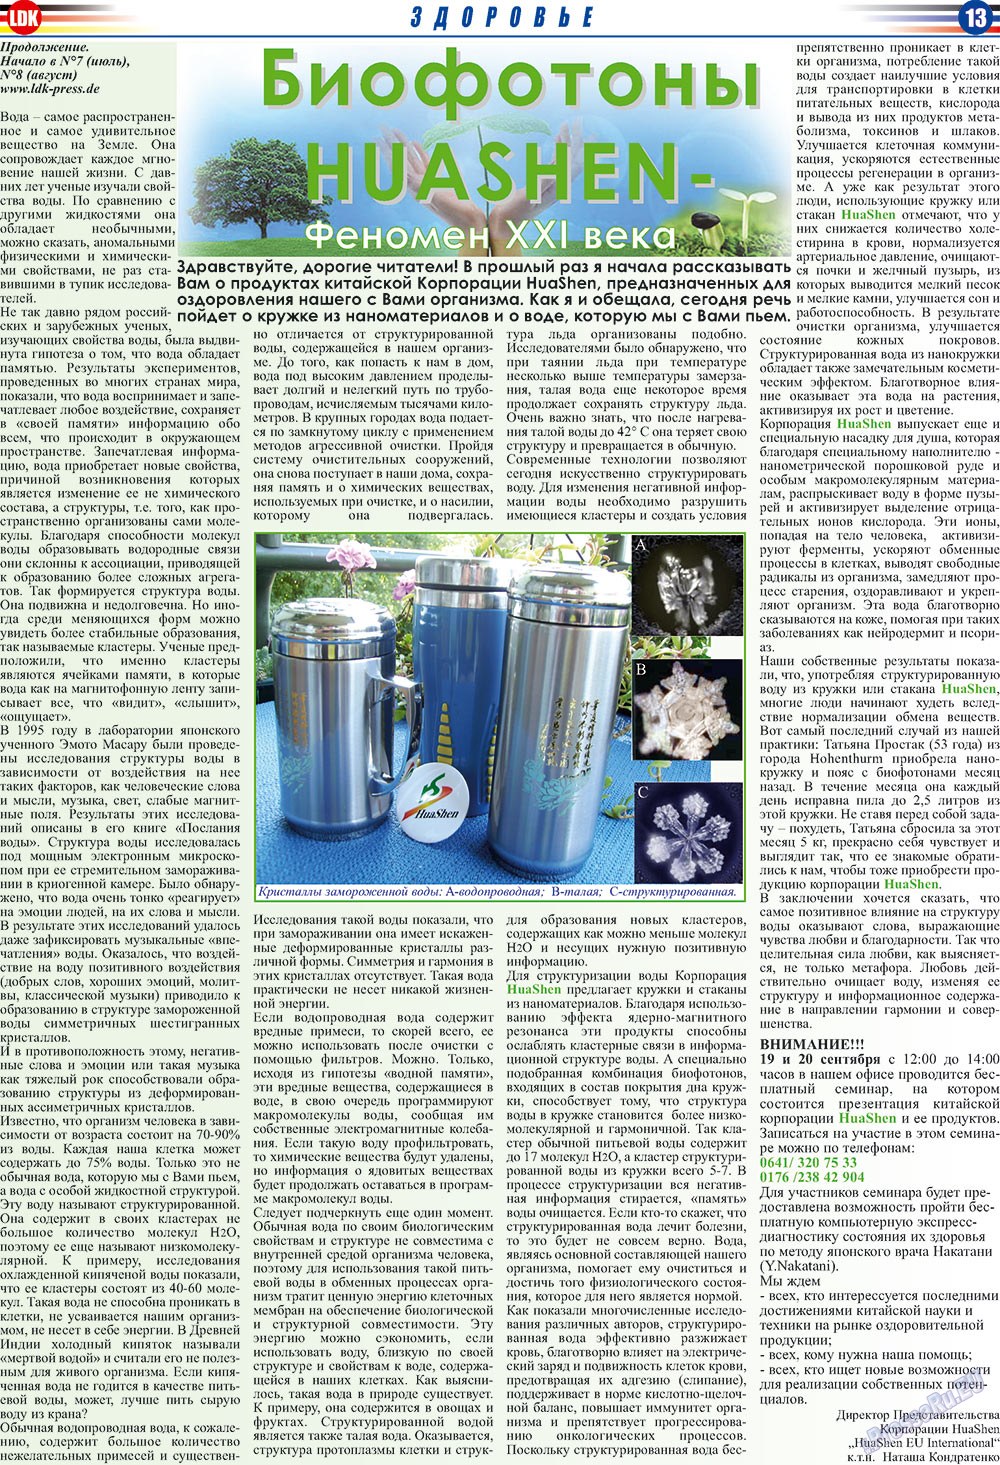 LDK по-русски, газета. 2009 №9 стр.13